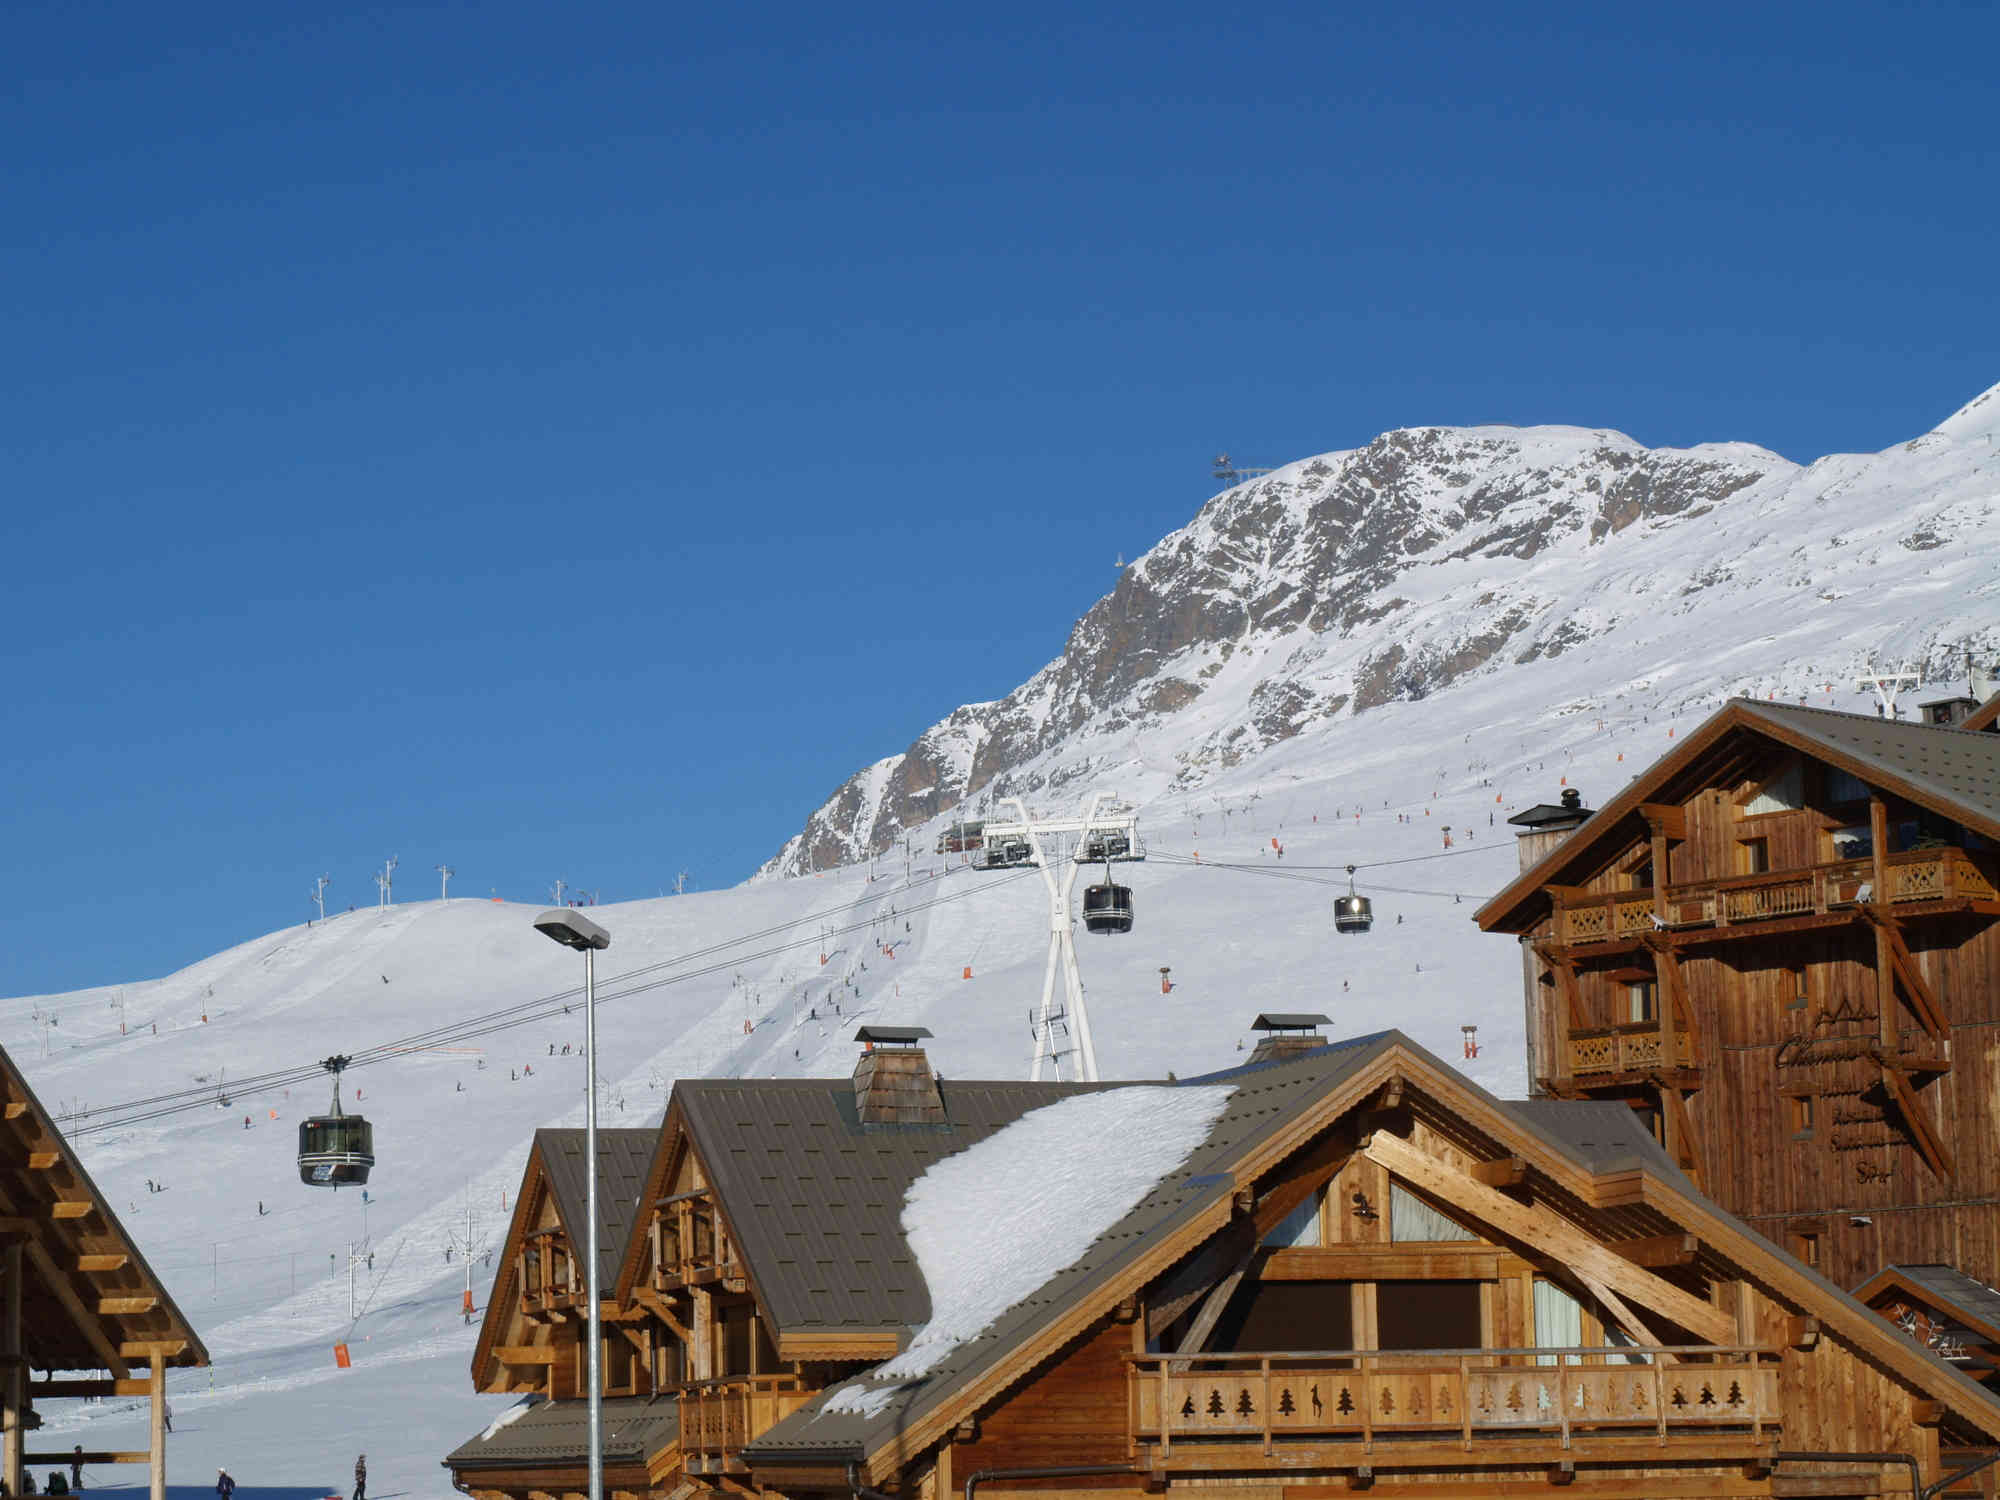 High altitude ski resorts